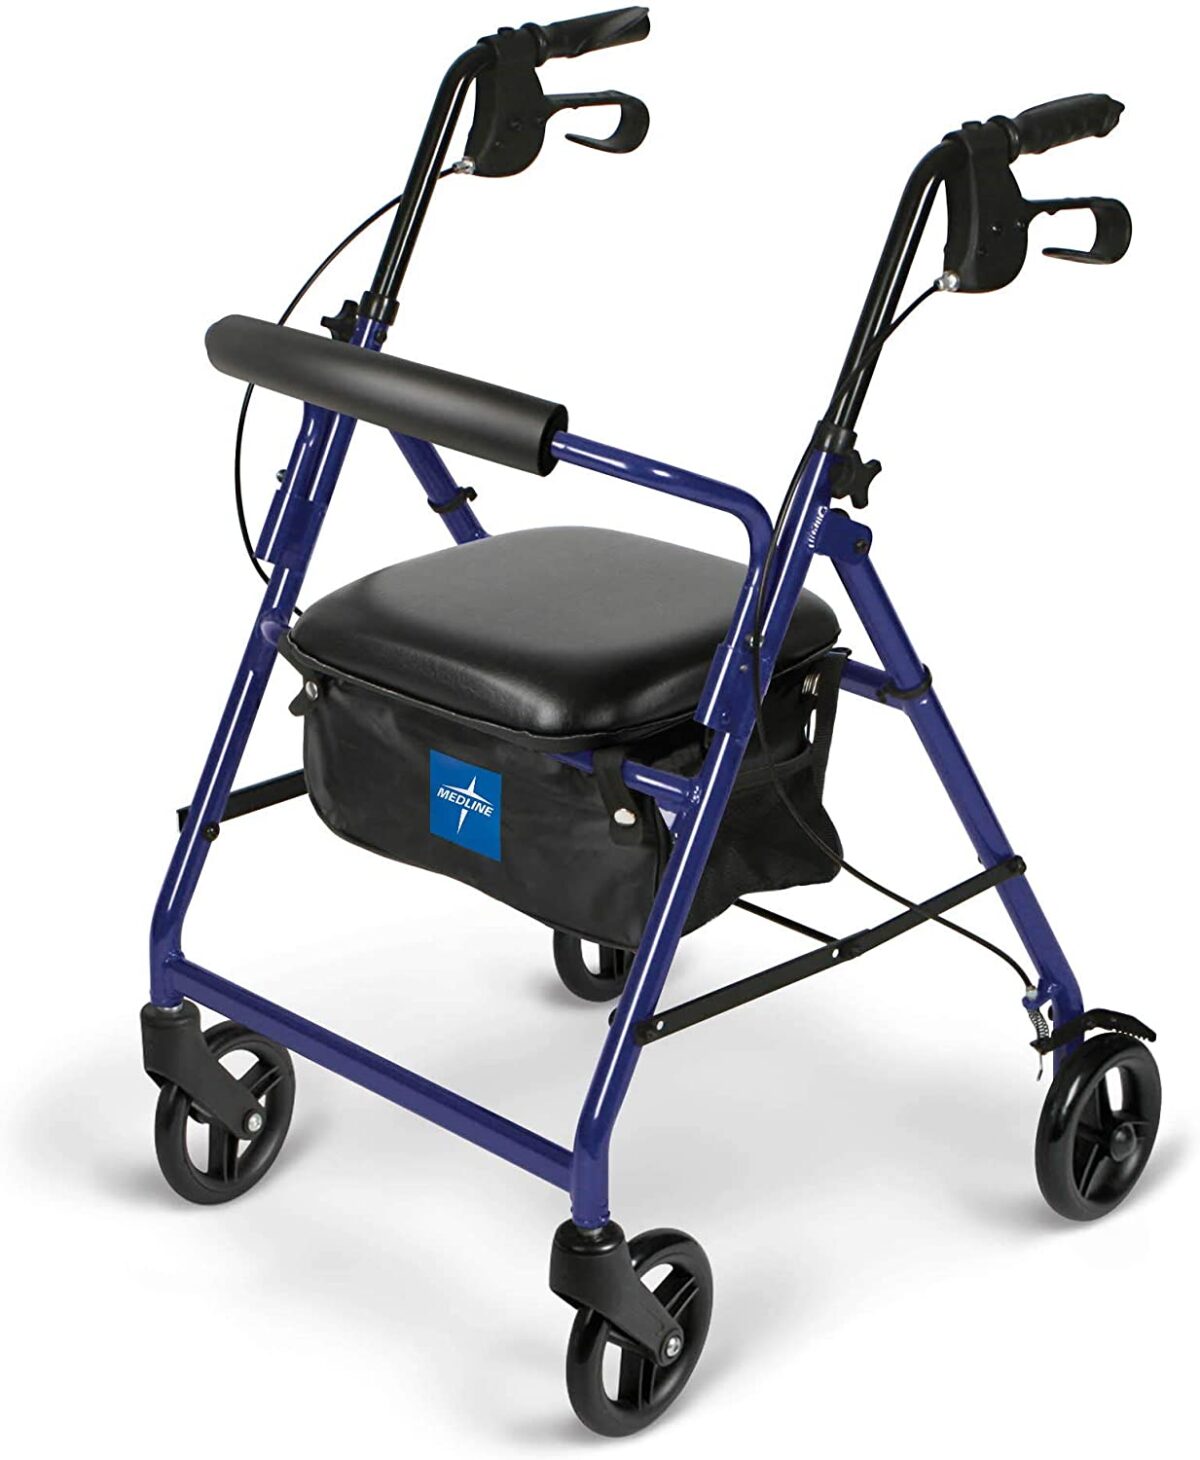 Medline Aluminum Rollator Walker with Seat, Folding Mobility Rolling Walker 6 inch Wheels, Blue Color